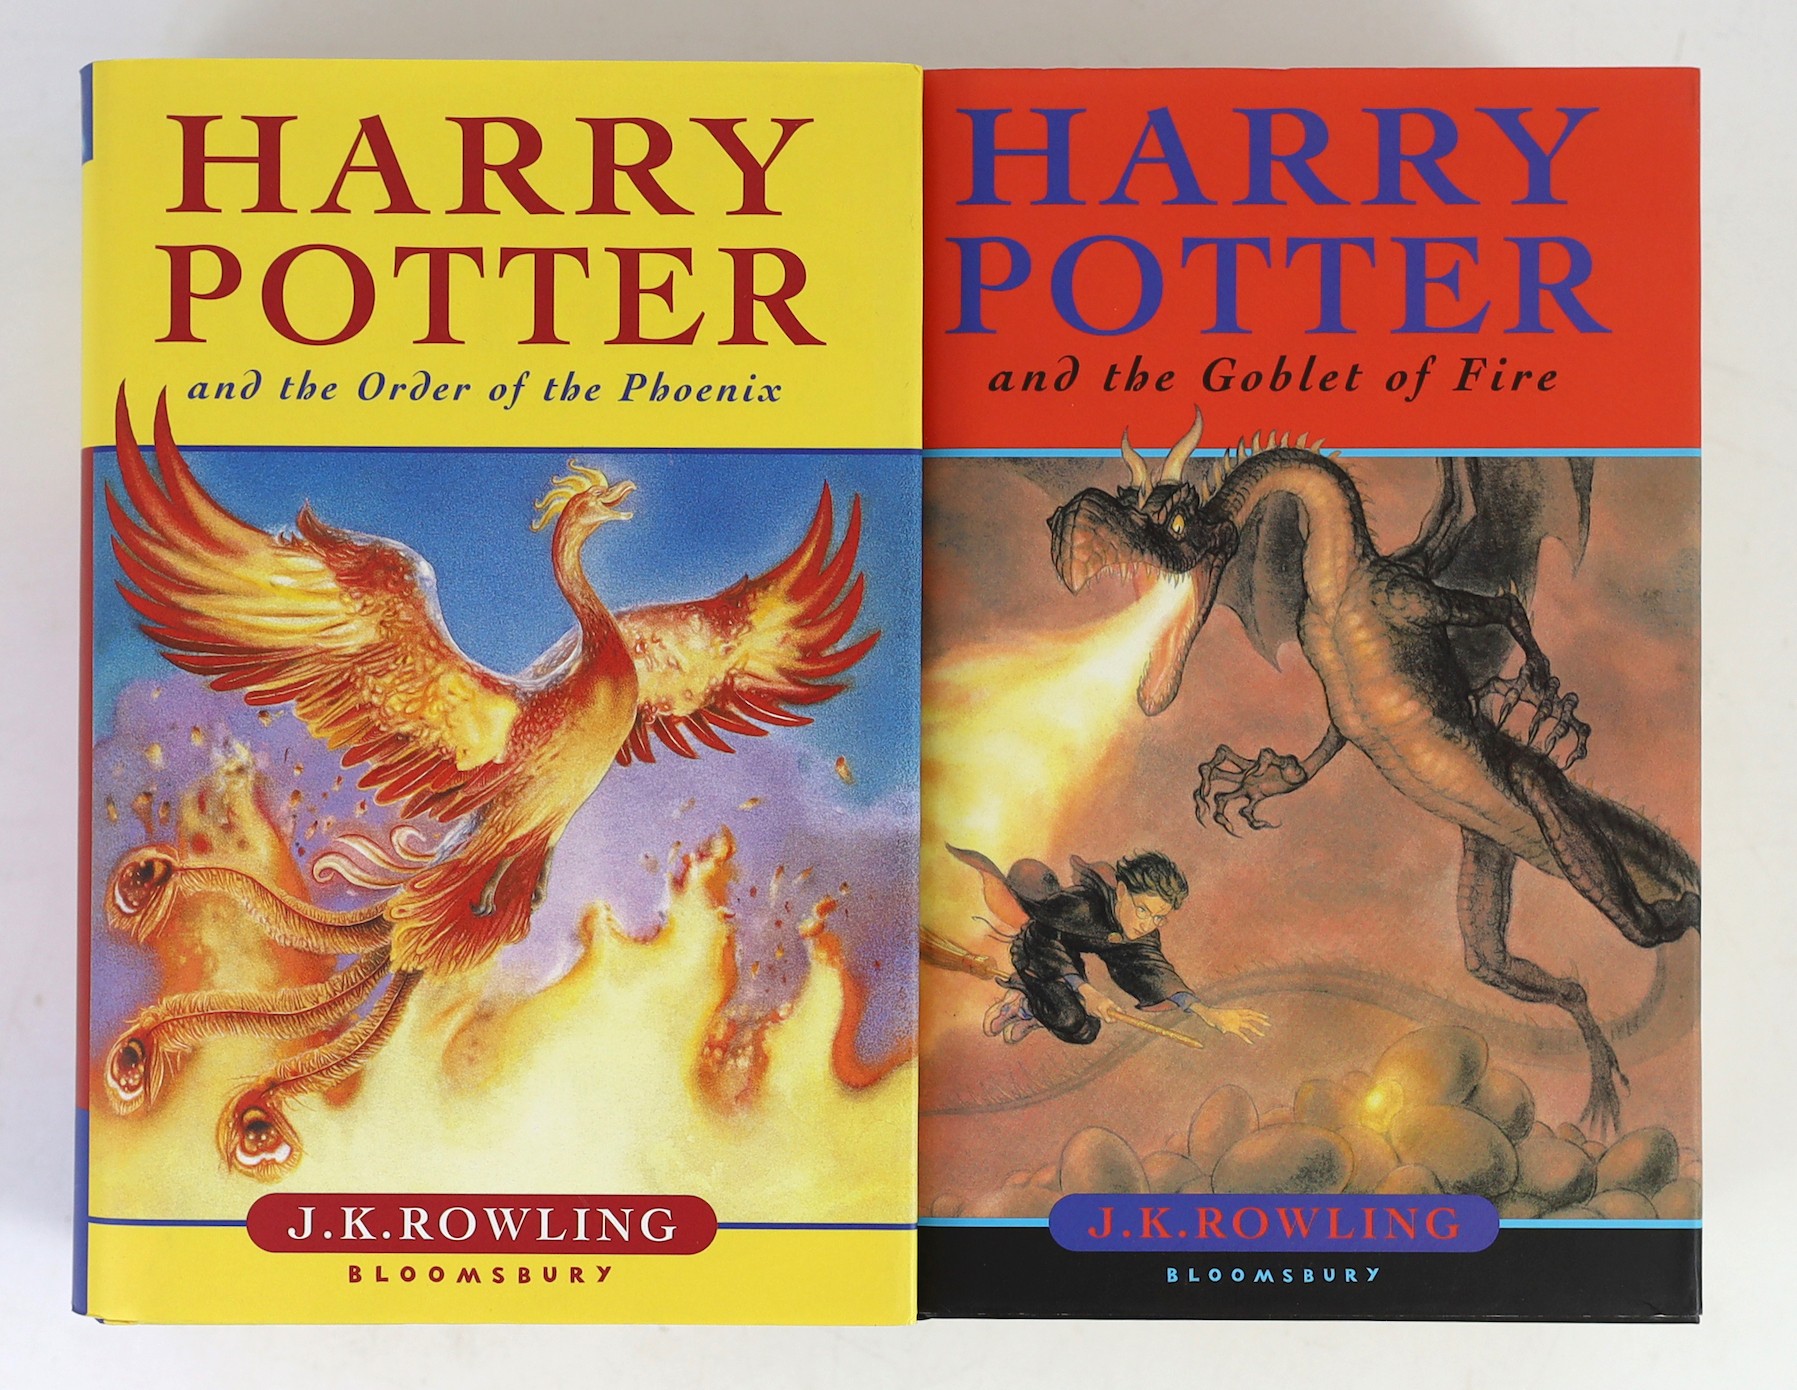 Rowling, J.K - 5 Harry Potter works - Chamber of Secrets, 1st deluke edition, 1st printing, Bloomsbury, 1999; Prisoner of Azkaban, 1st deluxe edition, 2nd printing, Bloomsbury, 1999; Philosopher’s Stone, 1st deluxe editi